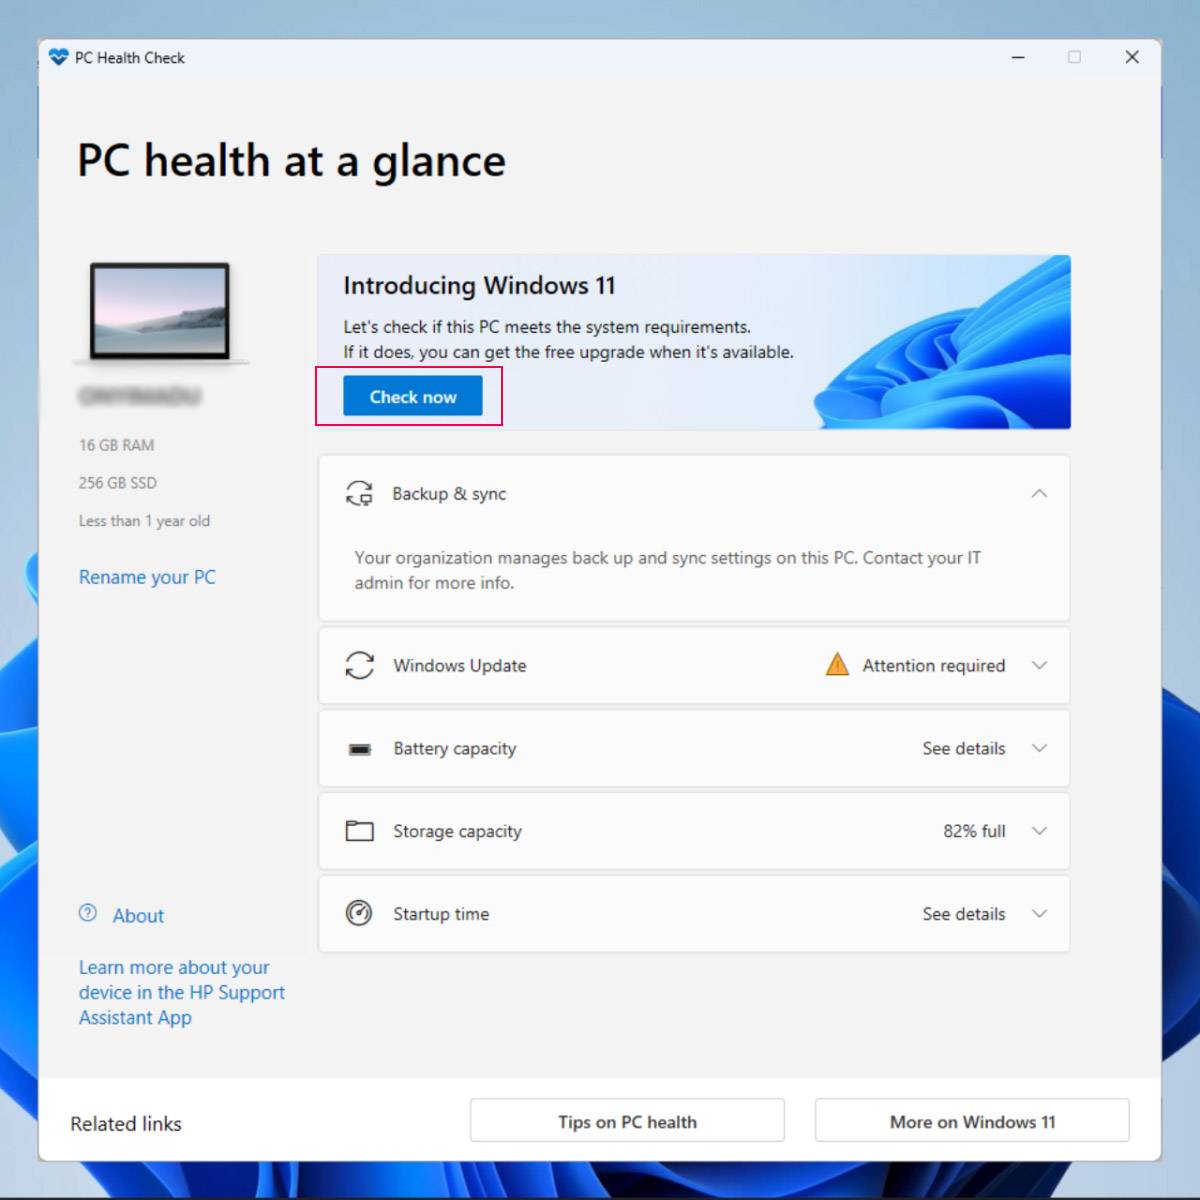 PC-Health-Check-App-Free-Diagnostic-Tool-Windows-11